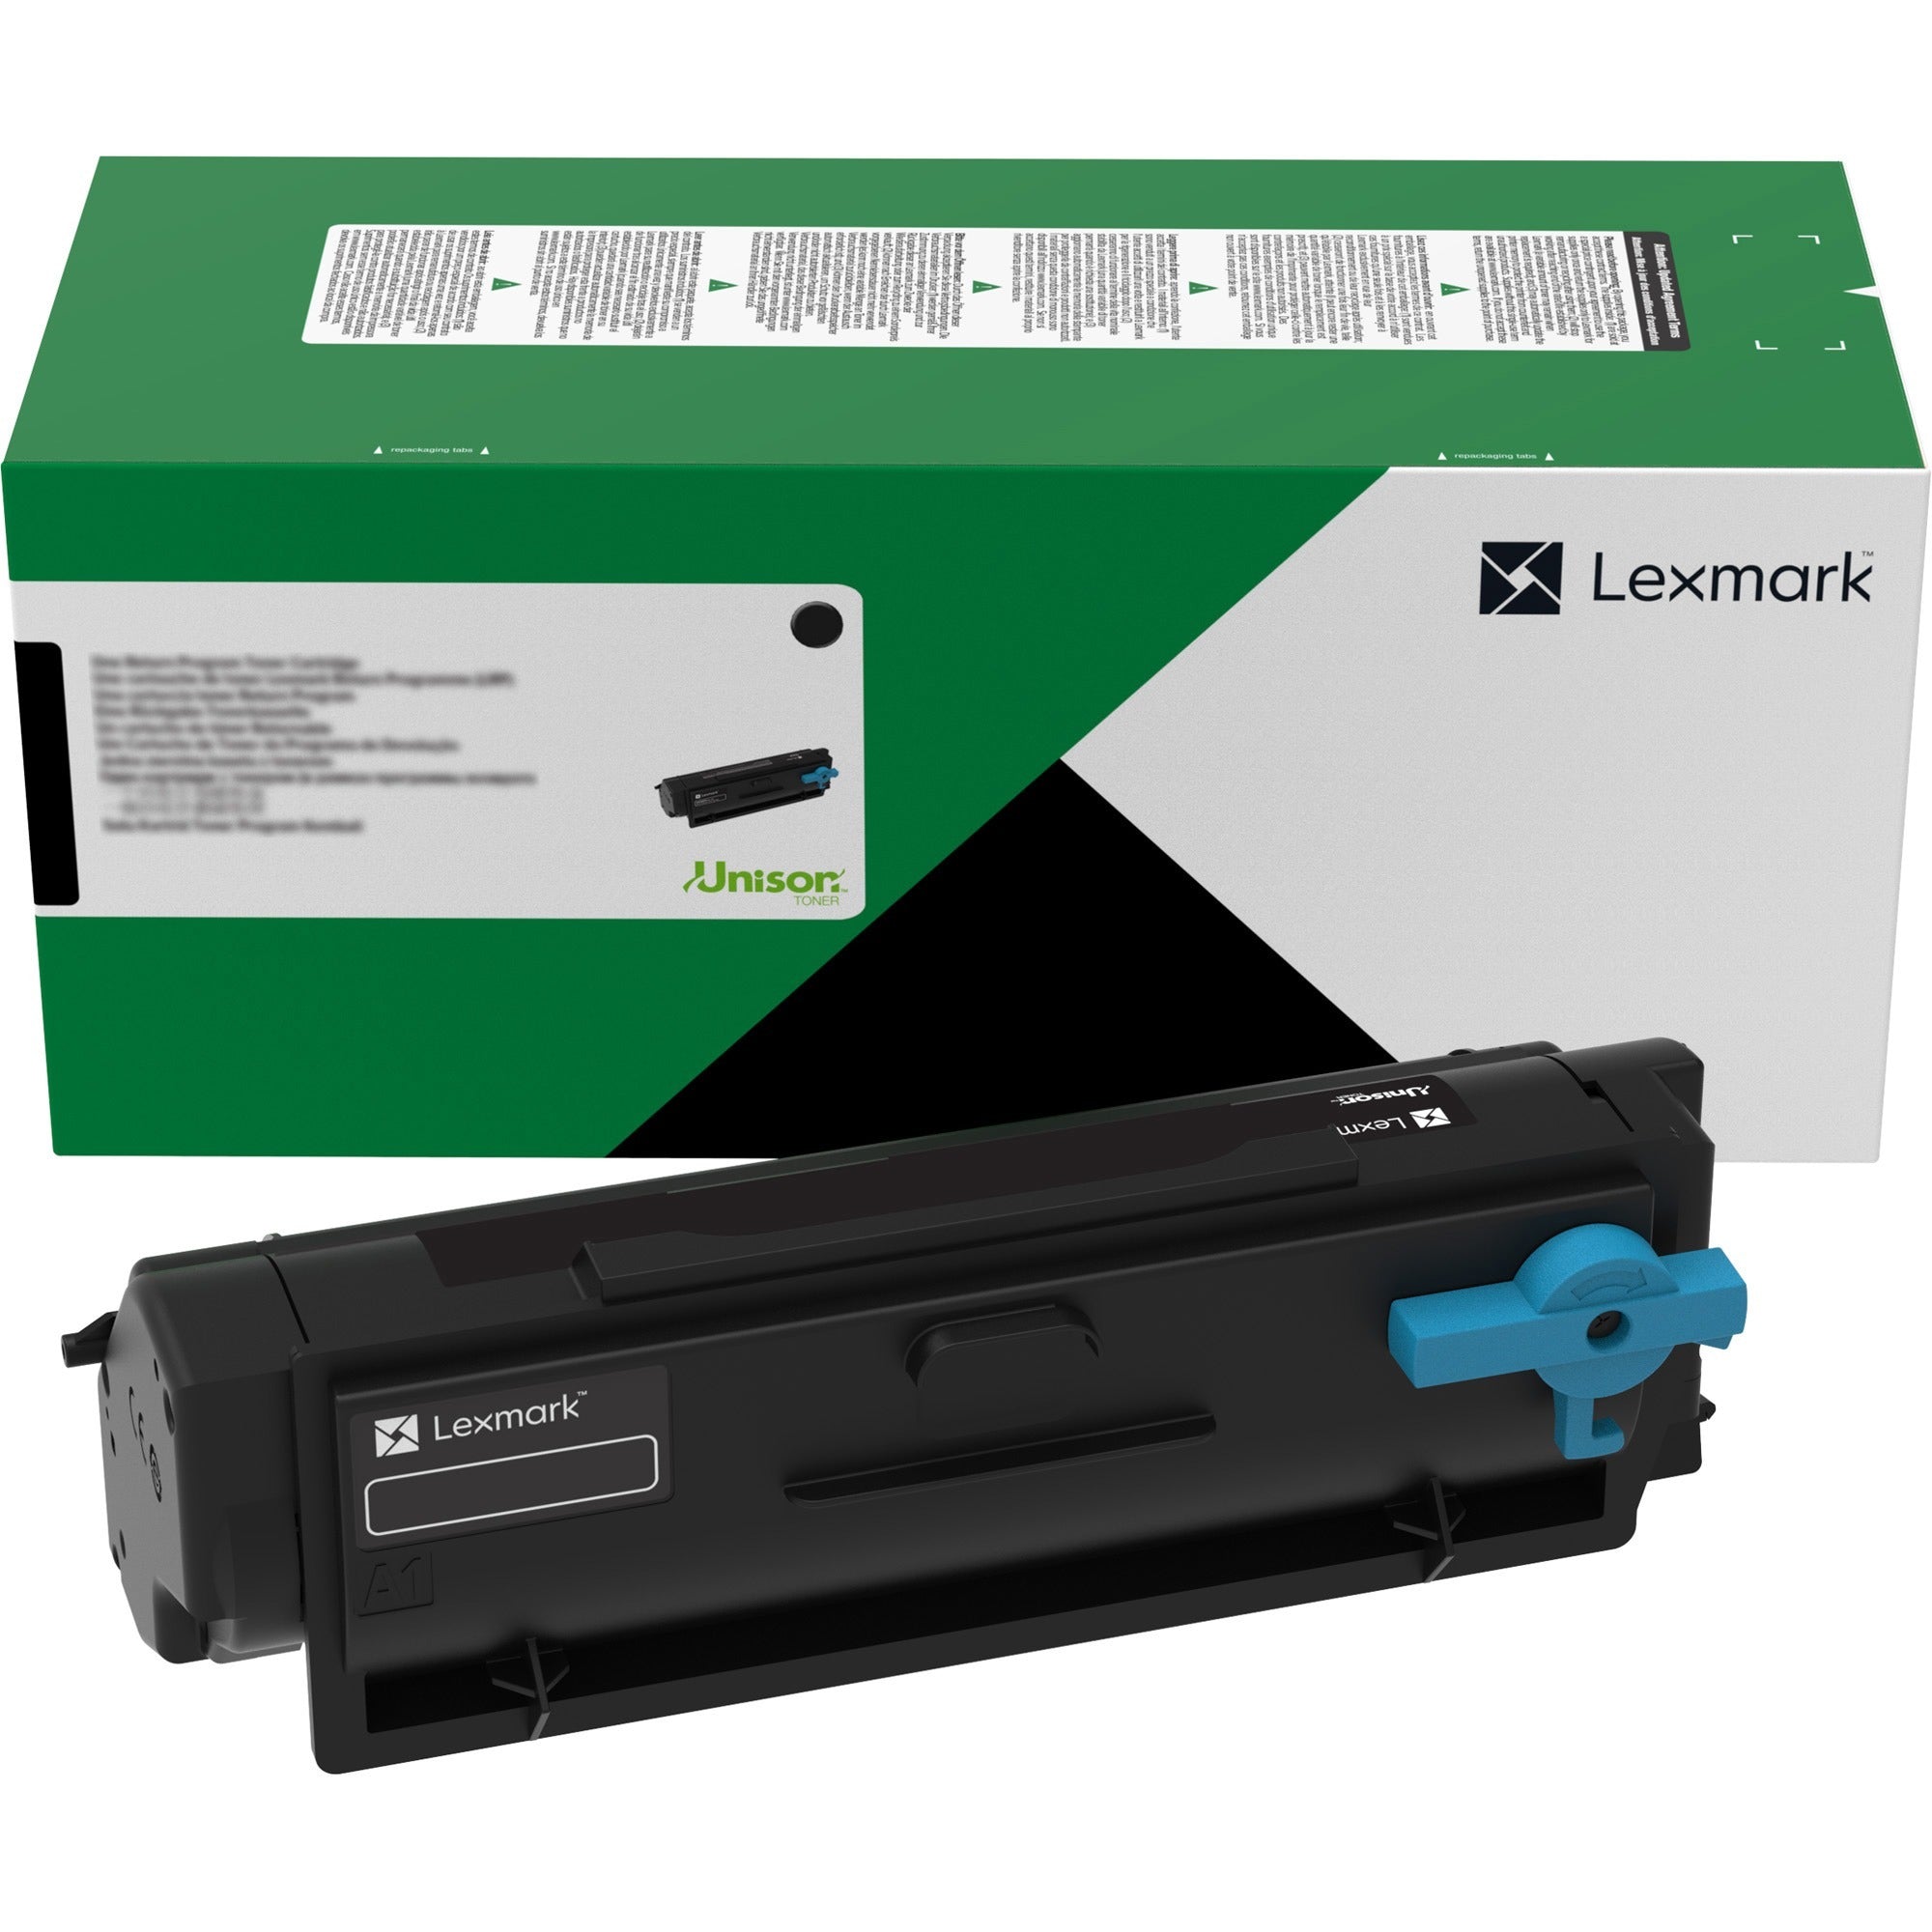 lexmark-unison-original-laser-toner-cartridge-black-1-pack-3000-pages_lex55b100e - 1